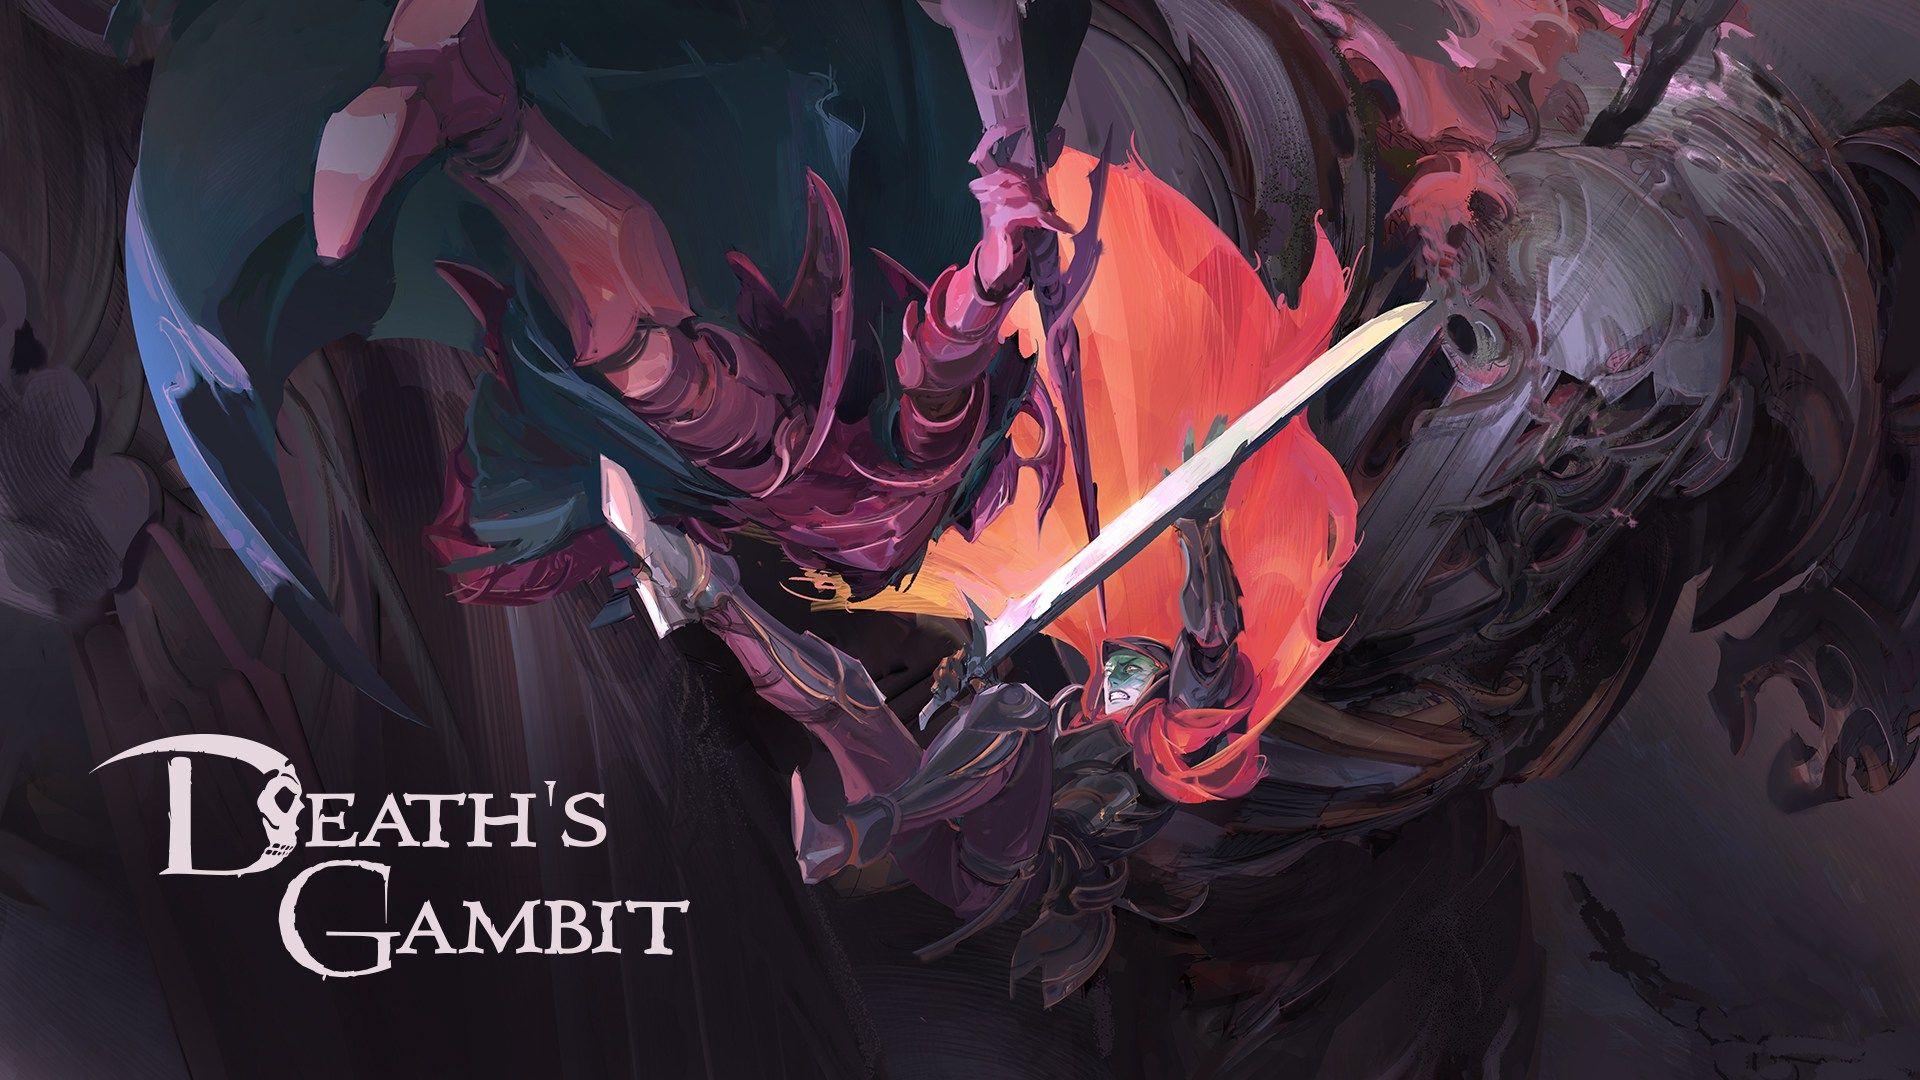 Adult Swim Games Launch The Slick Looking Death's Gambit